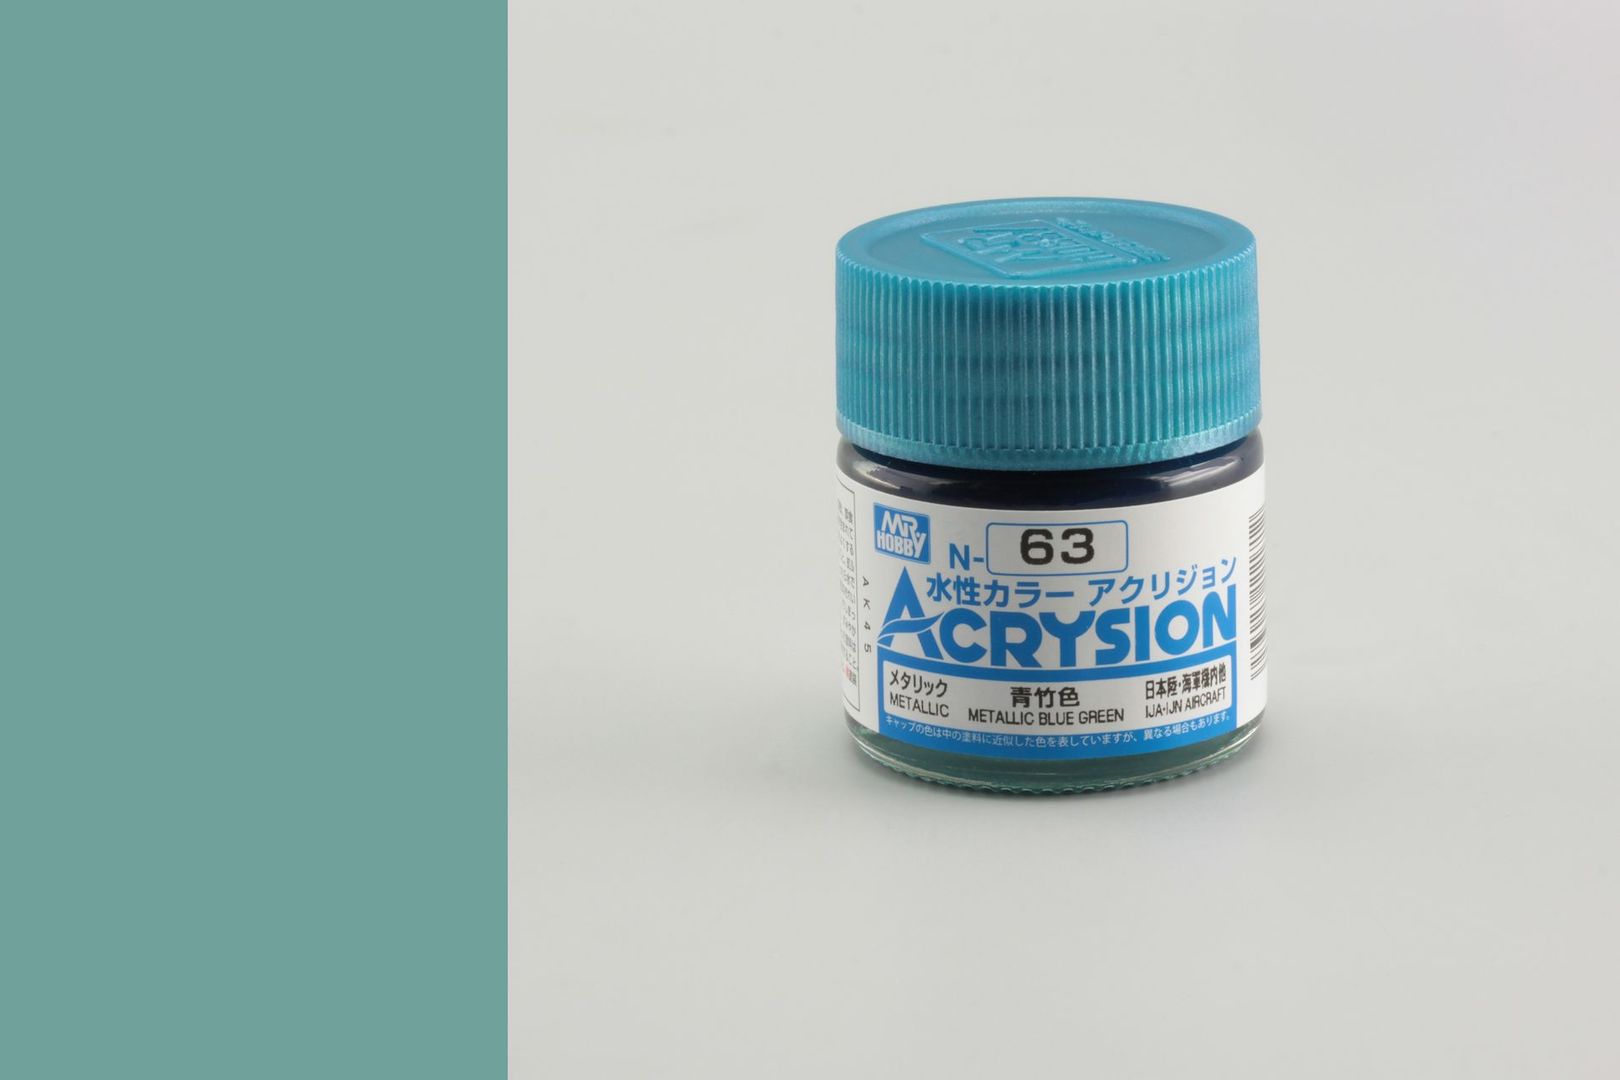 Acrysion (10 ml) Metallic Blue Green